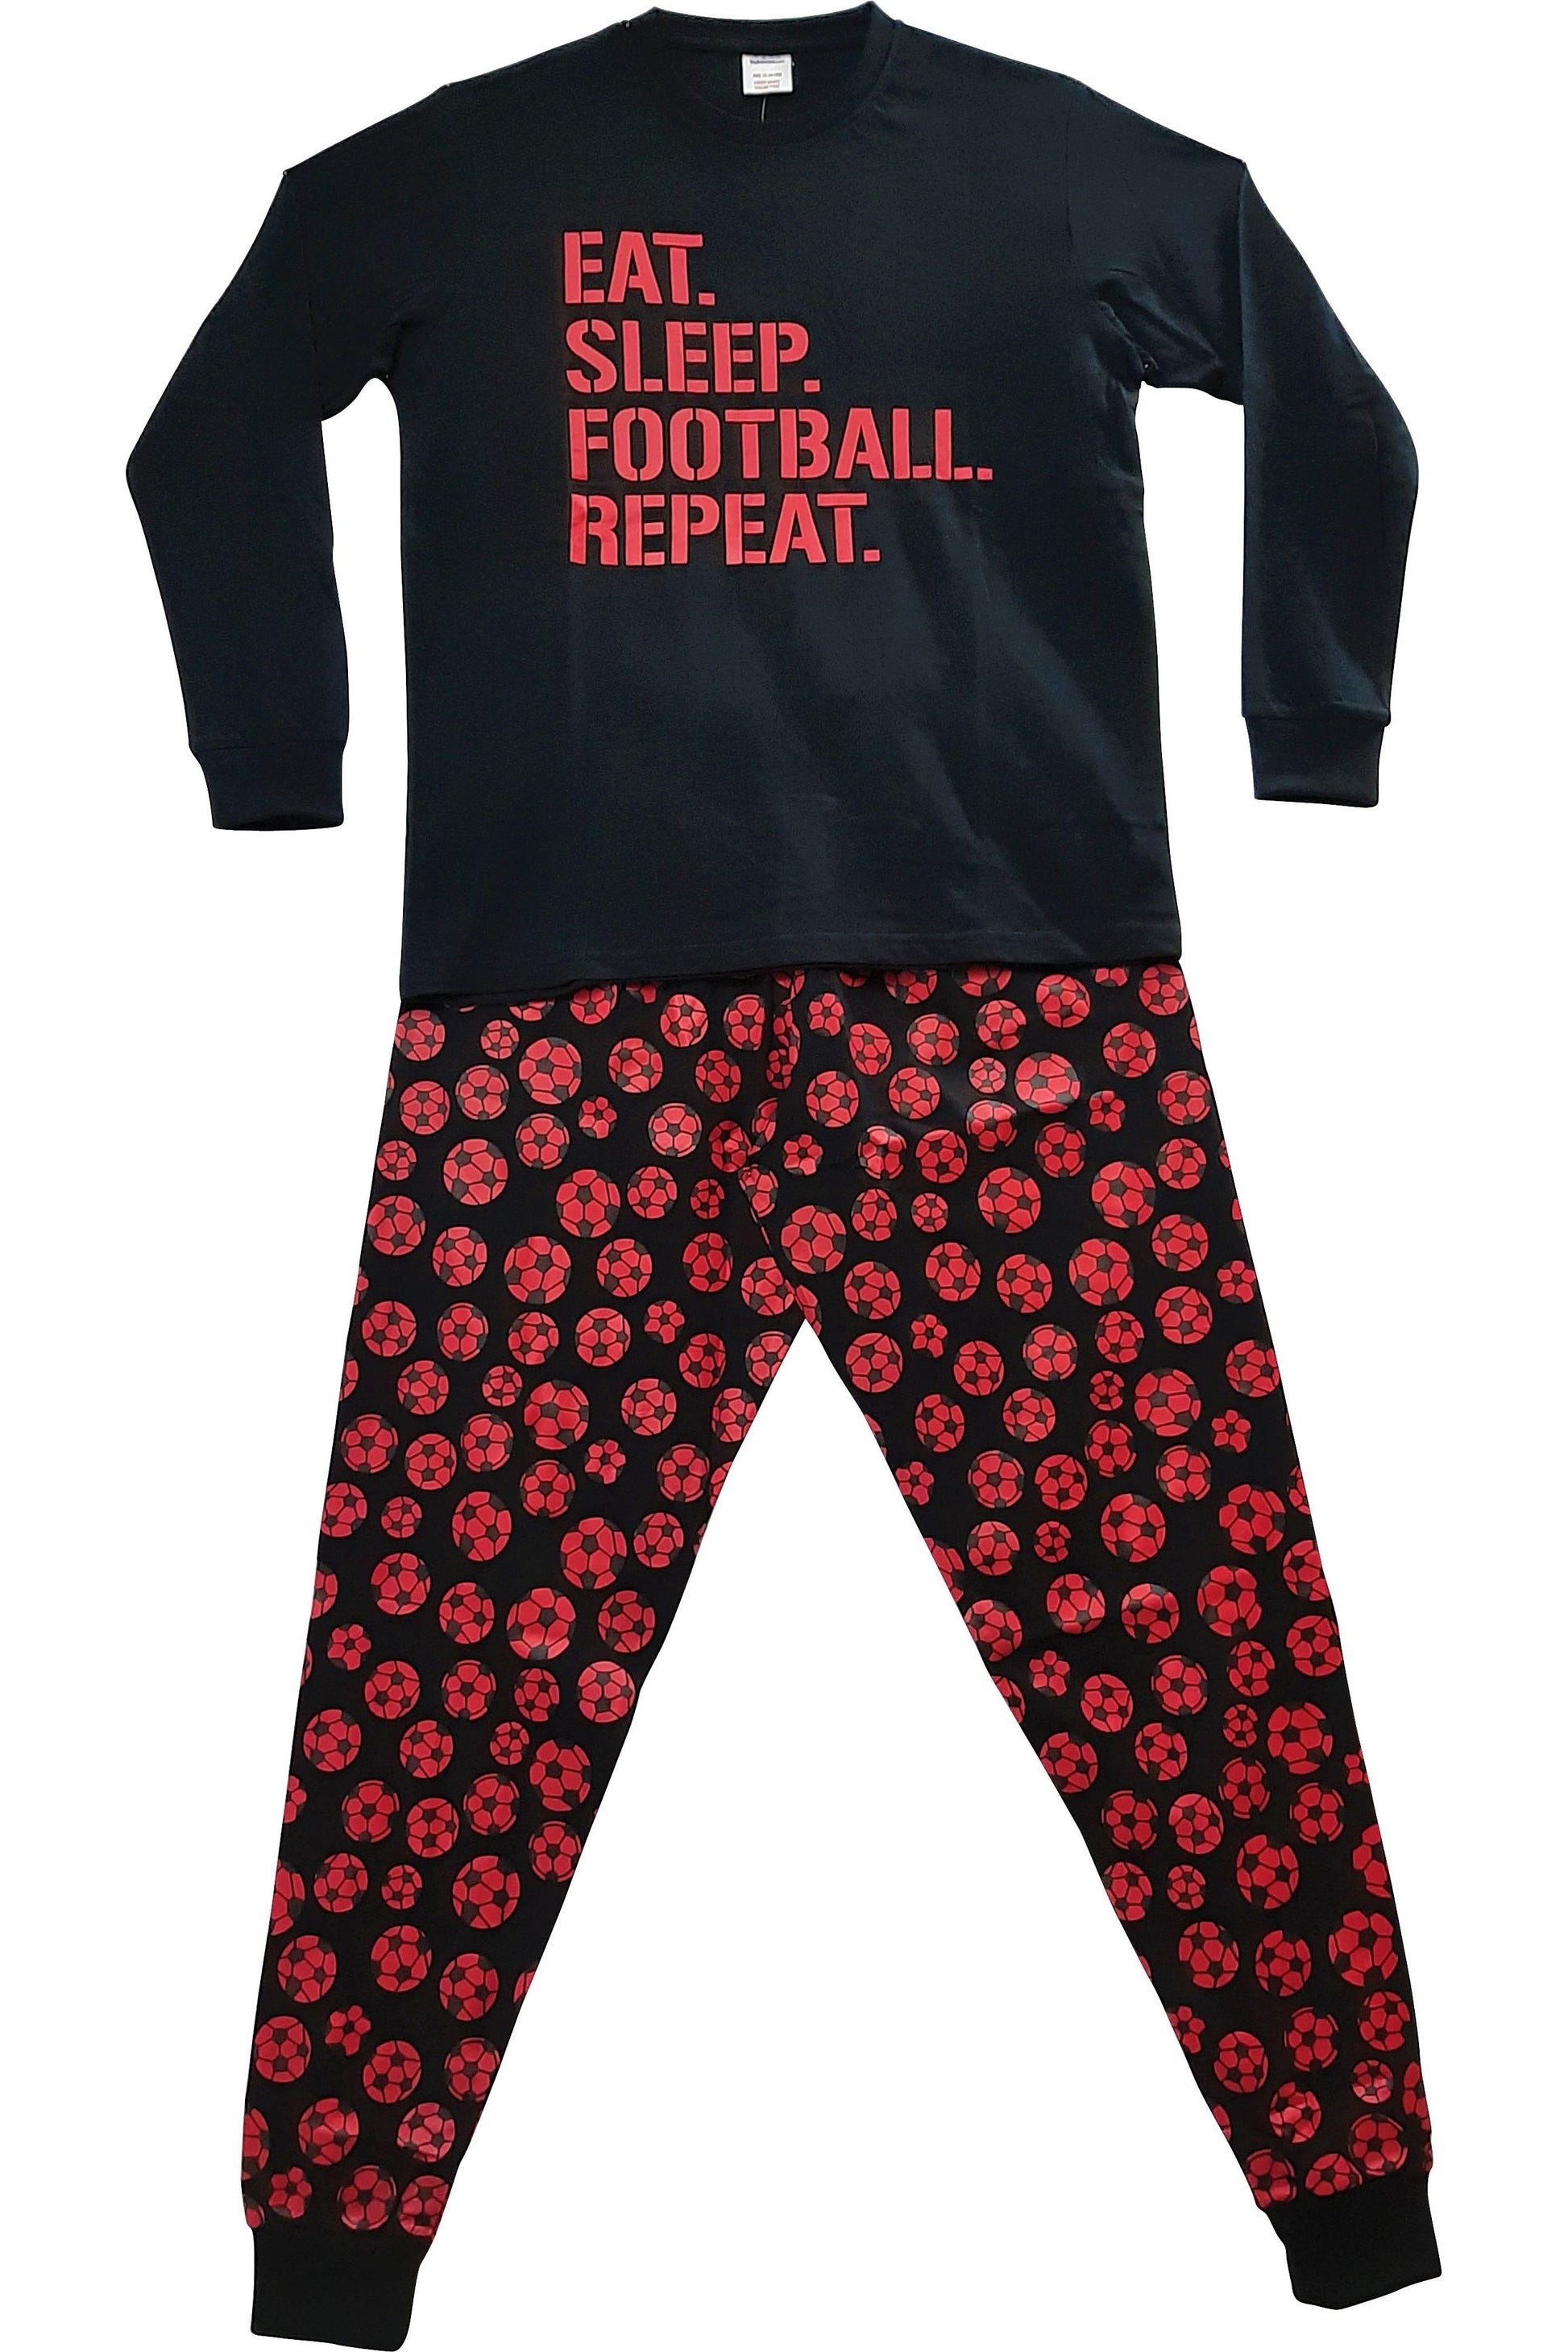 Eat Sleep Football Repeat Long Pyjamas - Pyjamas.com